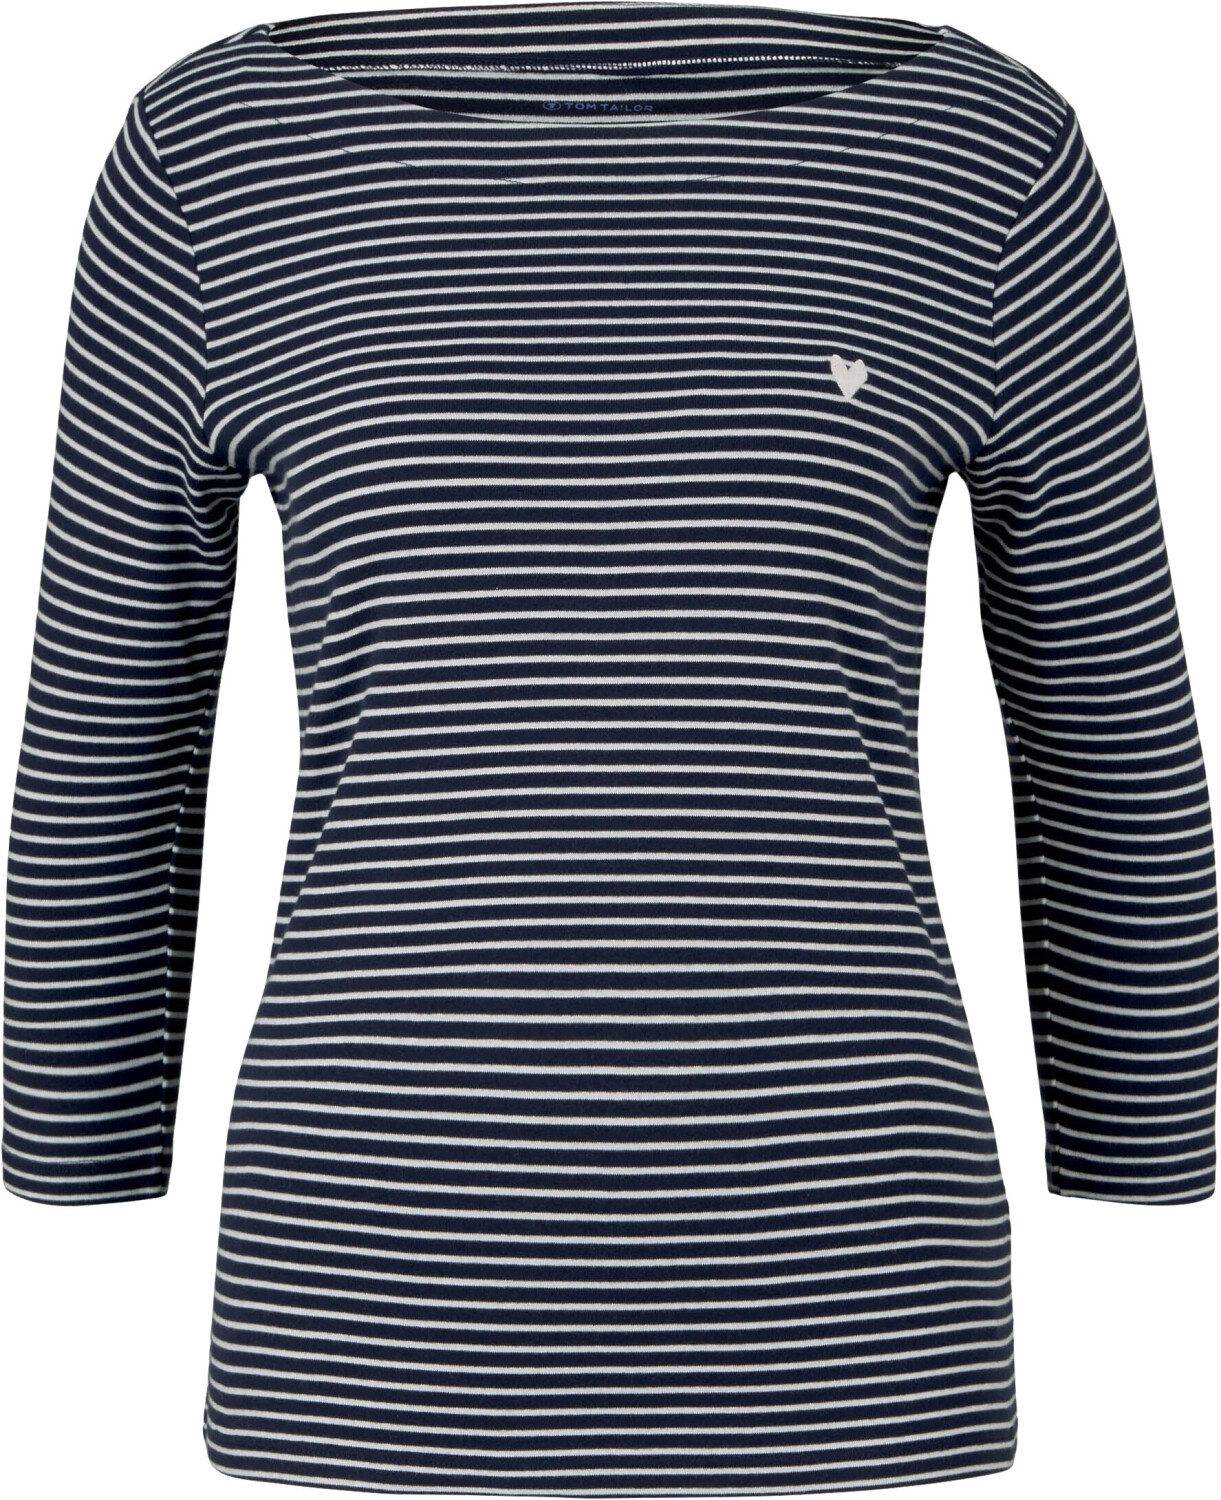 Tom Tailor Longsleeve Shirt (1030415) ab 15,99 € | Preisvergleich bei